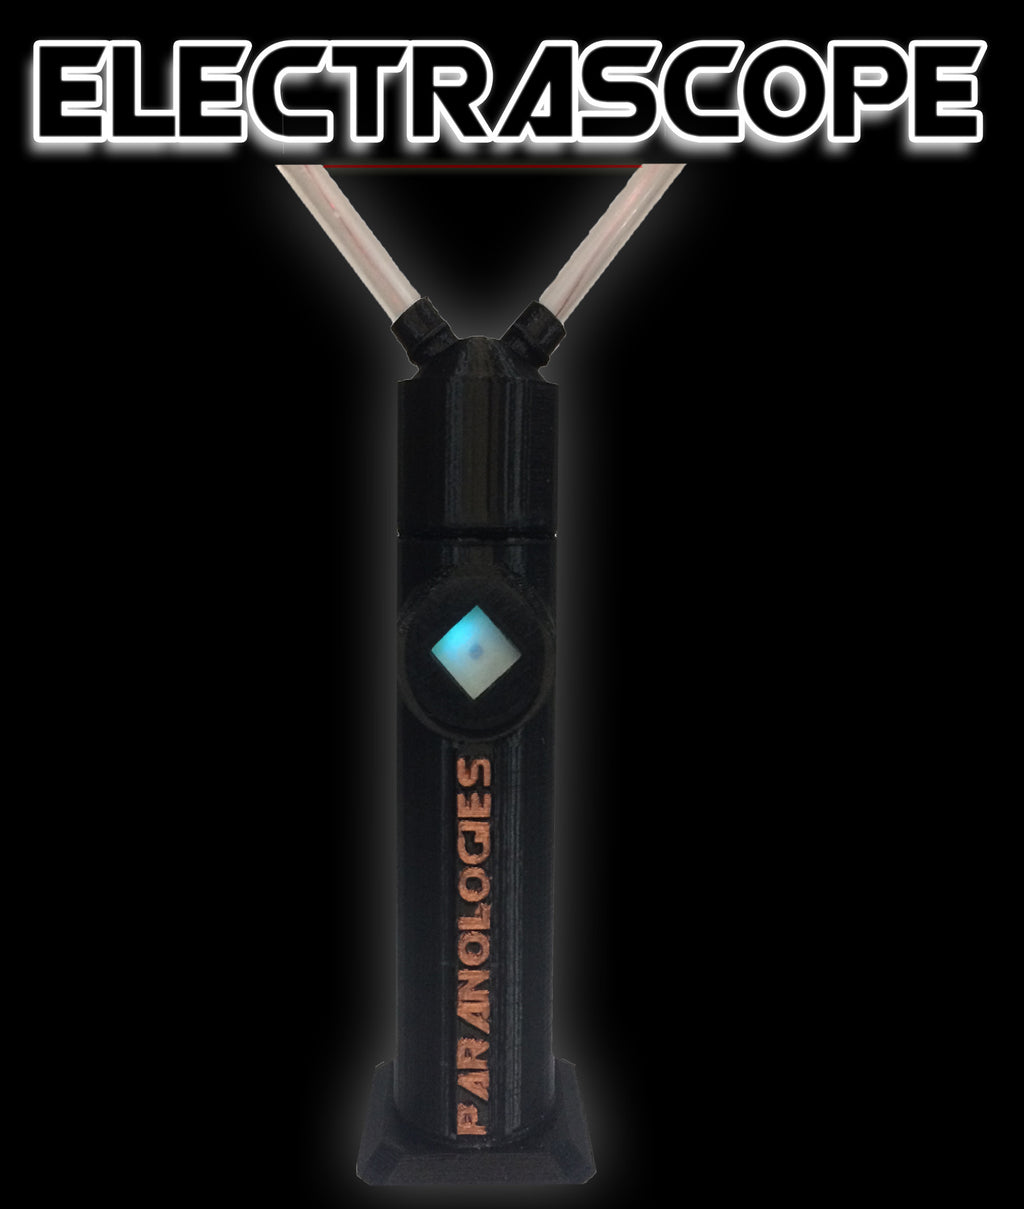 ELECTRASCOPE (Handheld EMF/Triboelectric Field Meter) Parabug